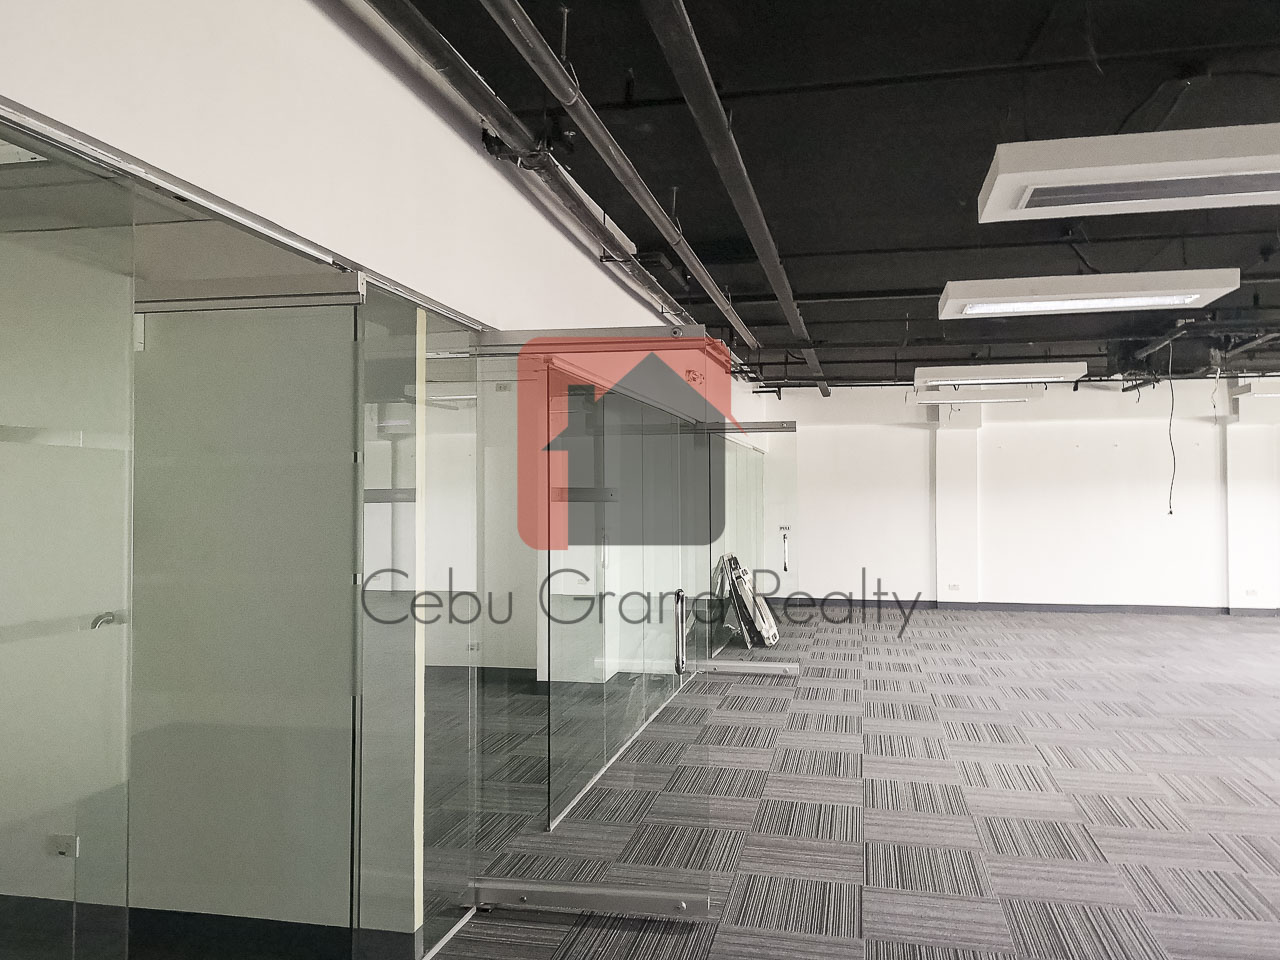 RCP186 388 SqM Office for Rent in Cebu IT Park Cebu Grand Realty